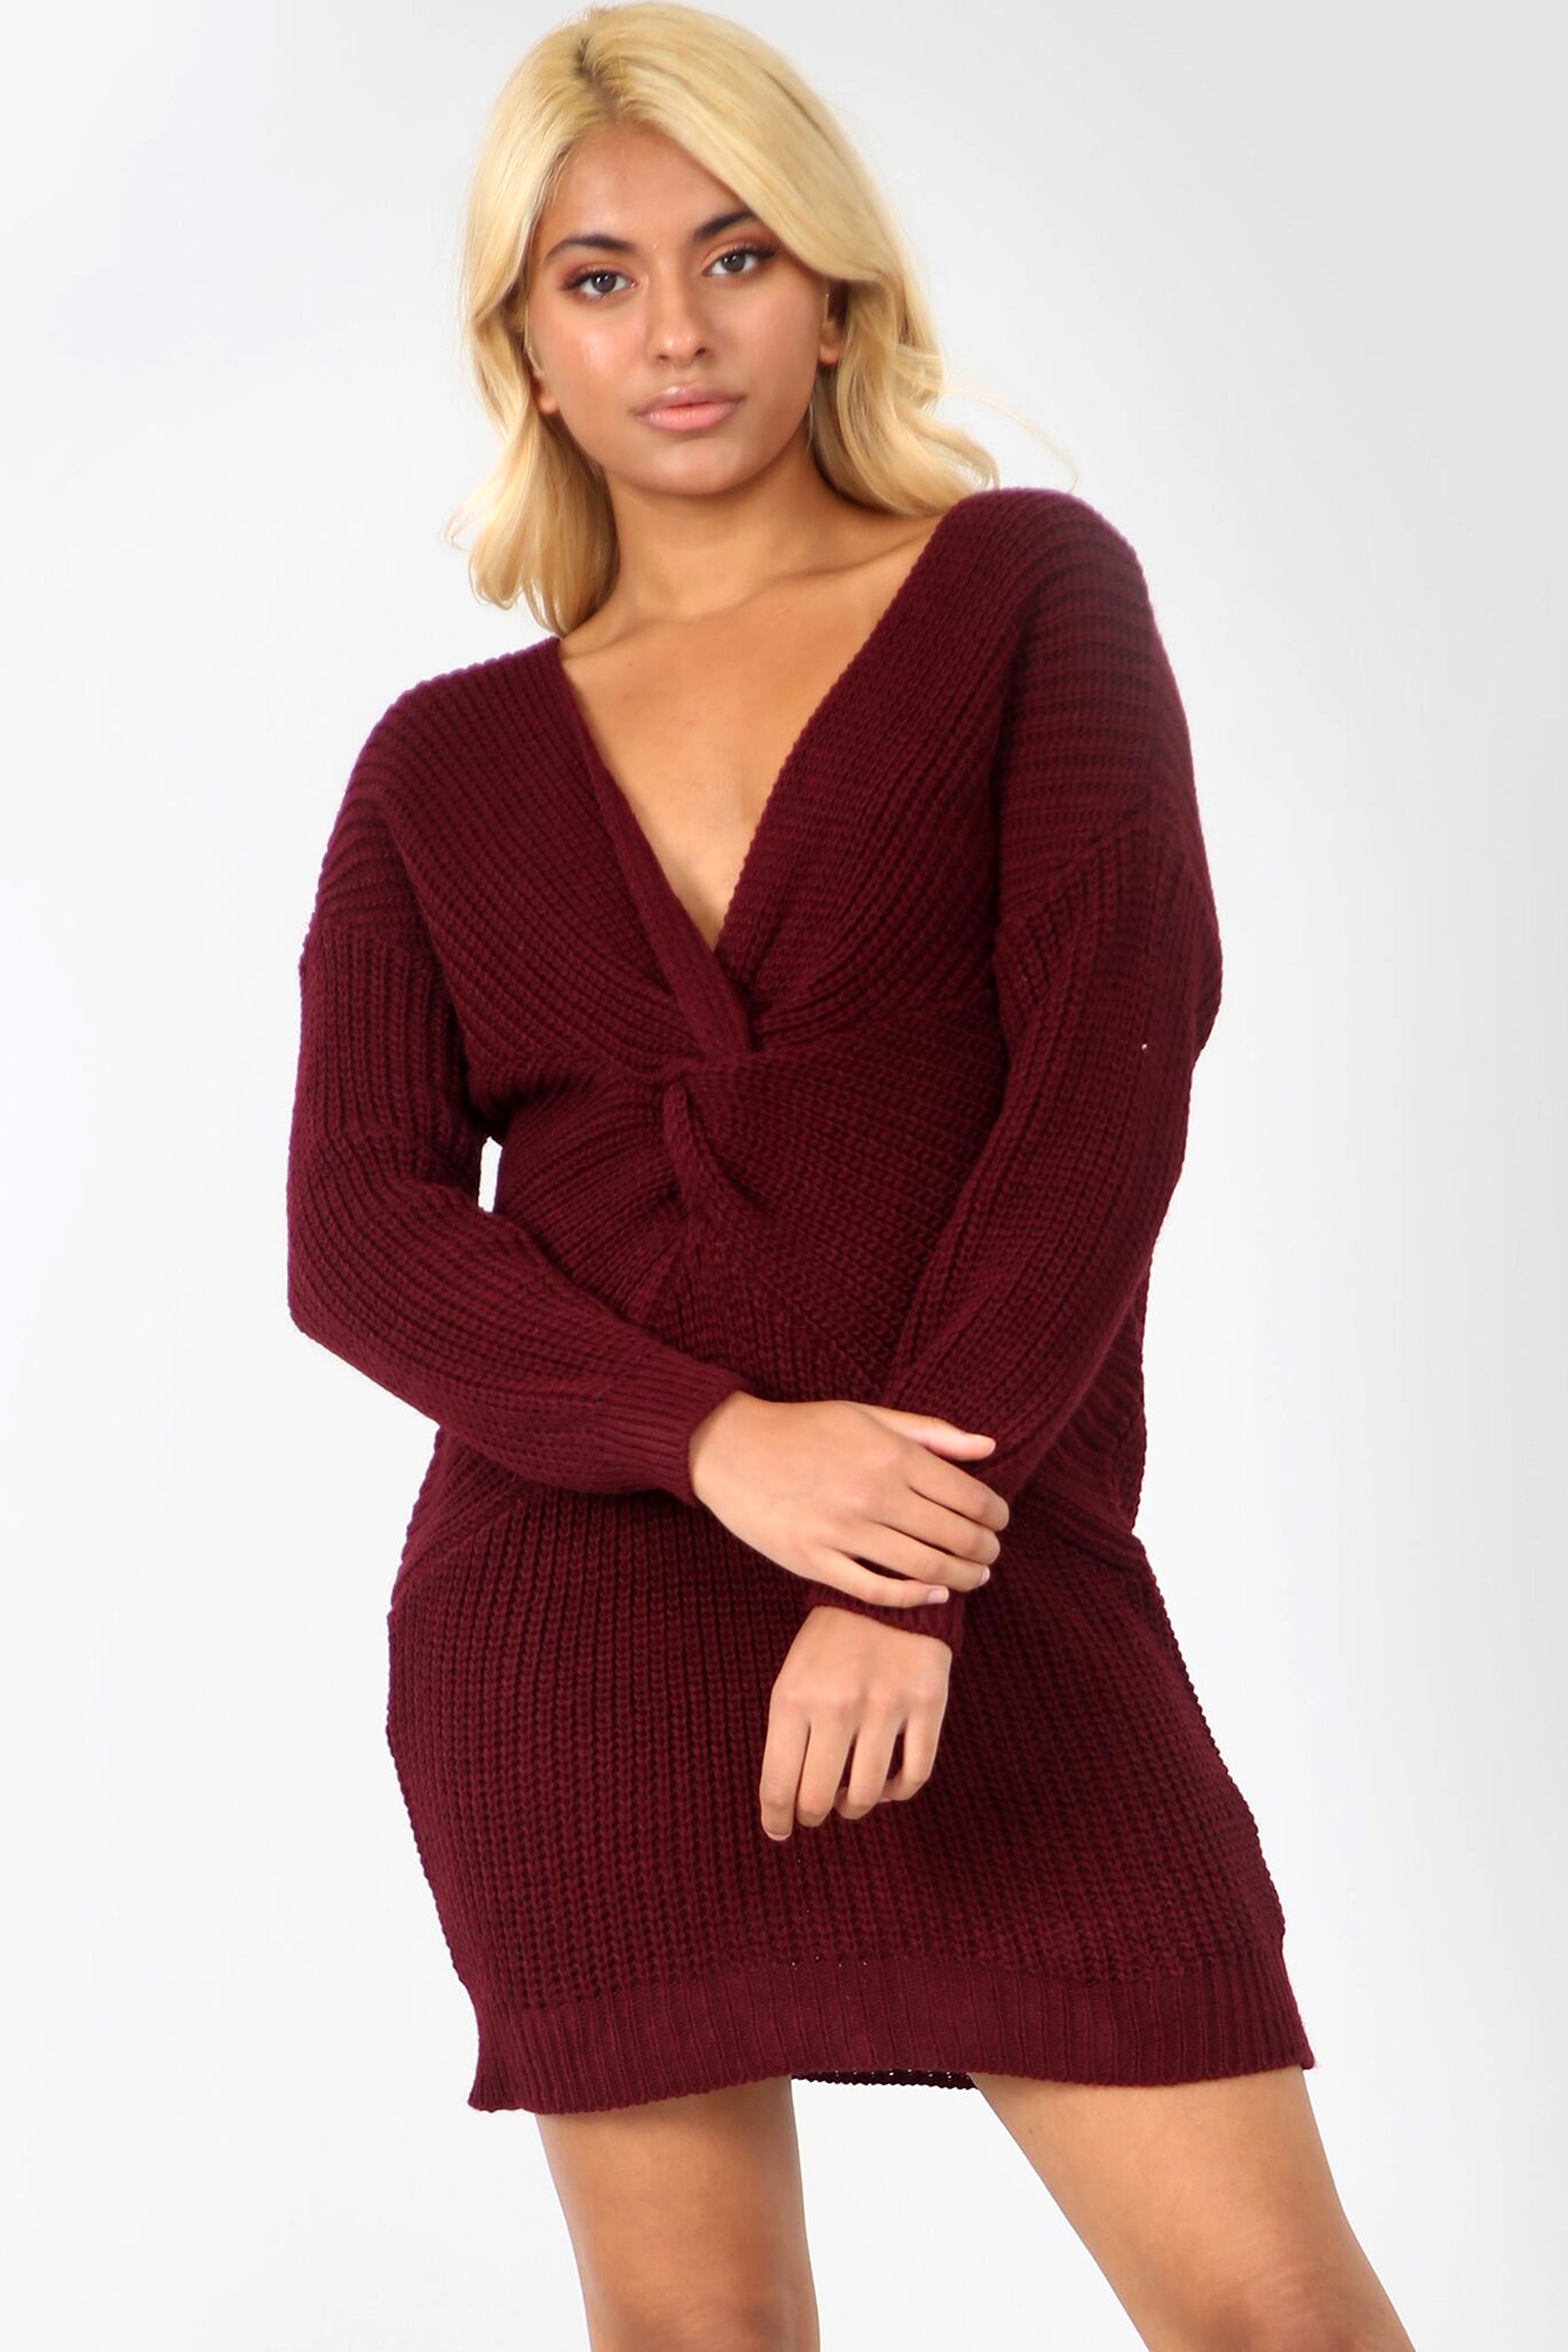 Burgundy Twist Front Oversize Knitted Jumper Dress - bejealous-com